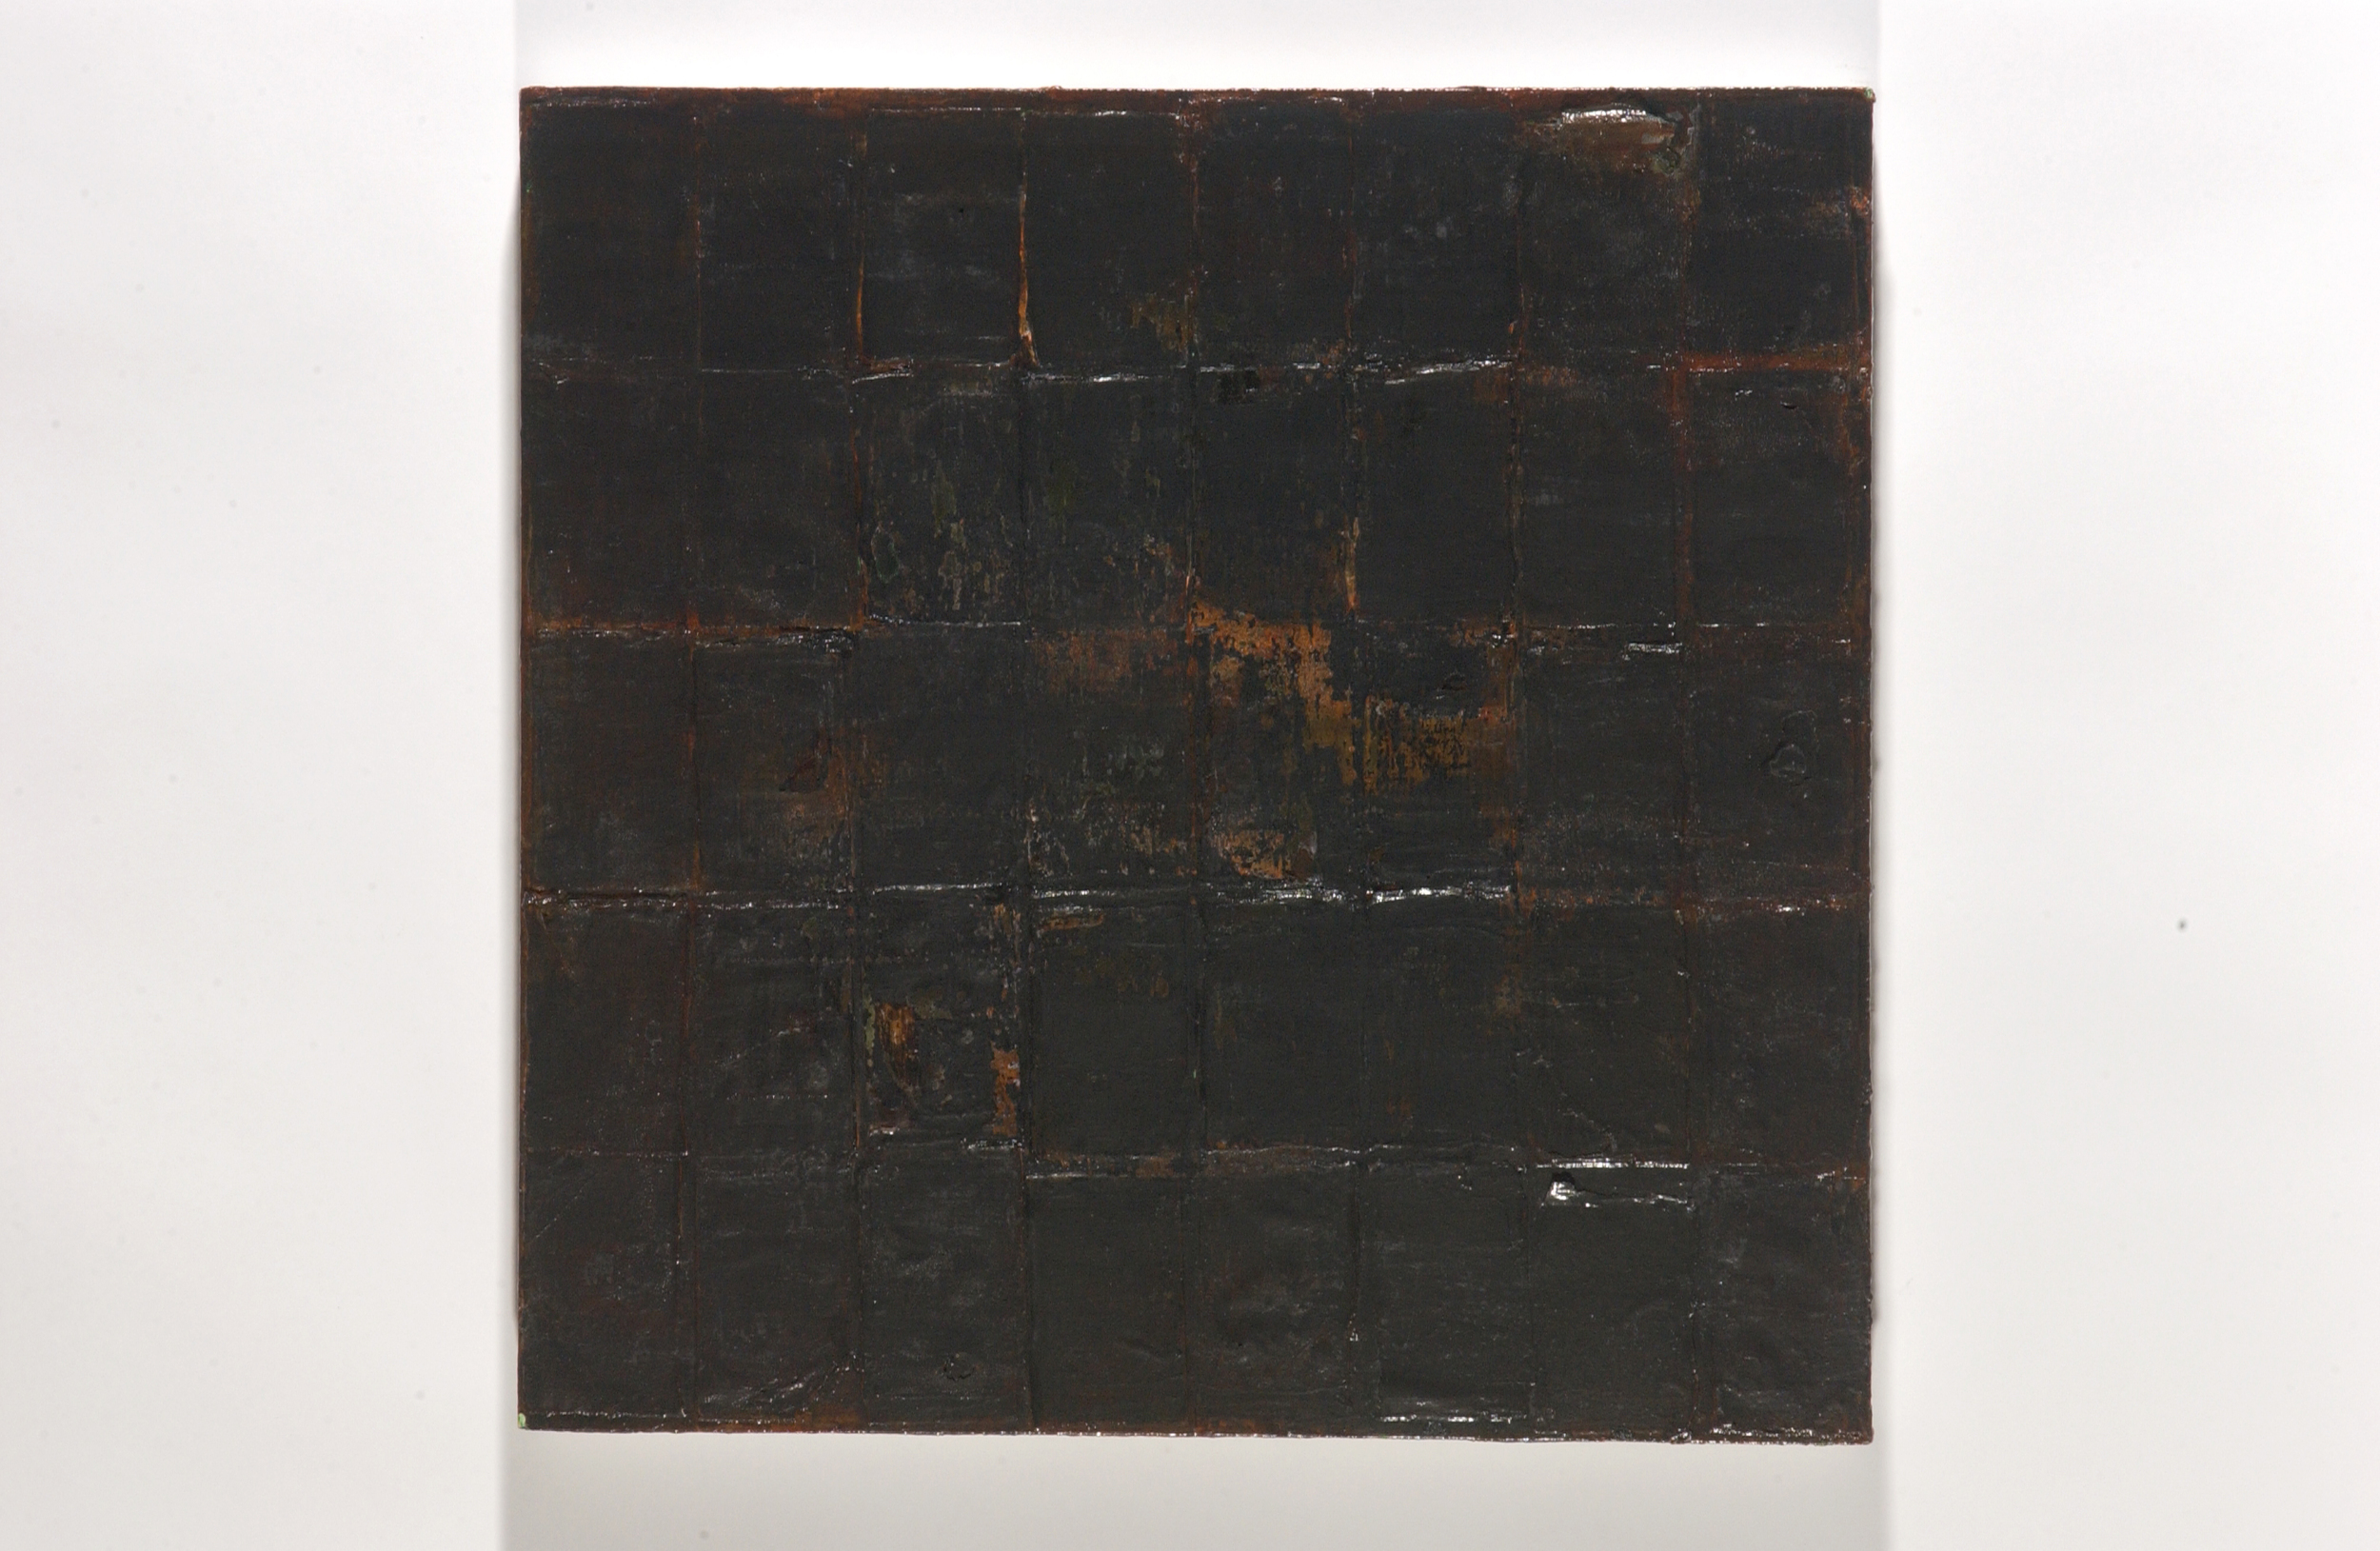   of rust and Rilke   oil, encaustic &amp; debris on panel, 24x24" 2004 